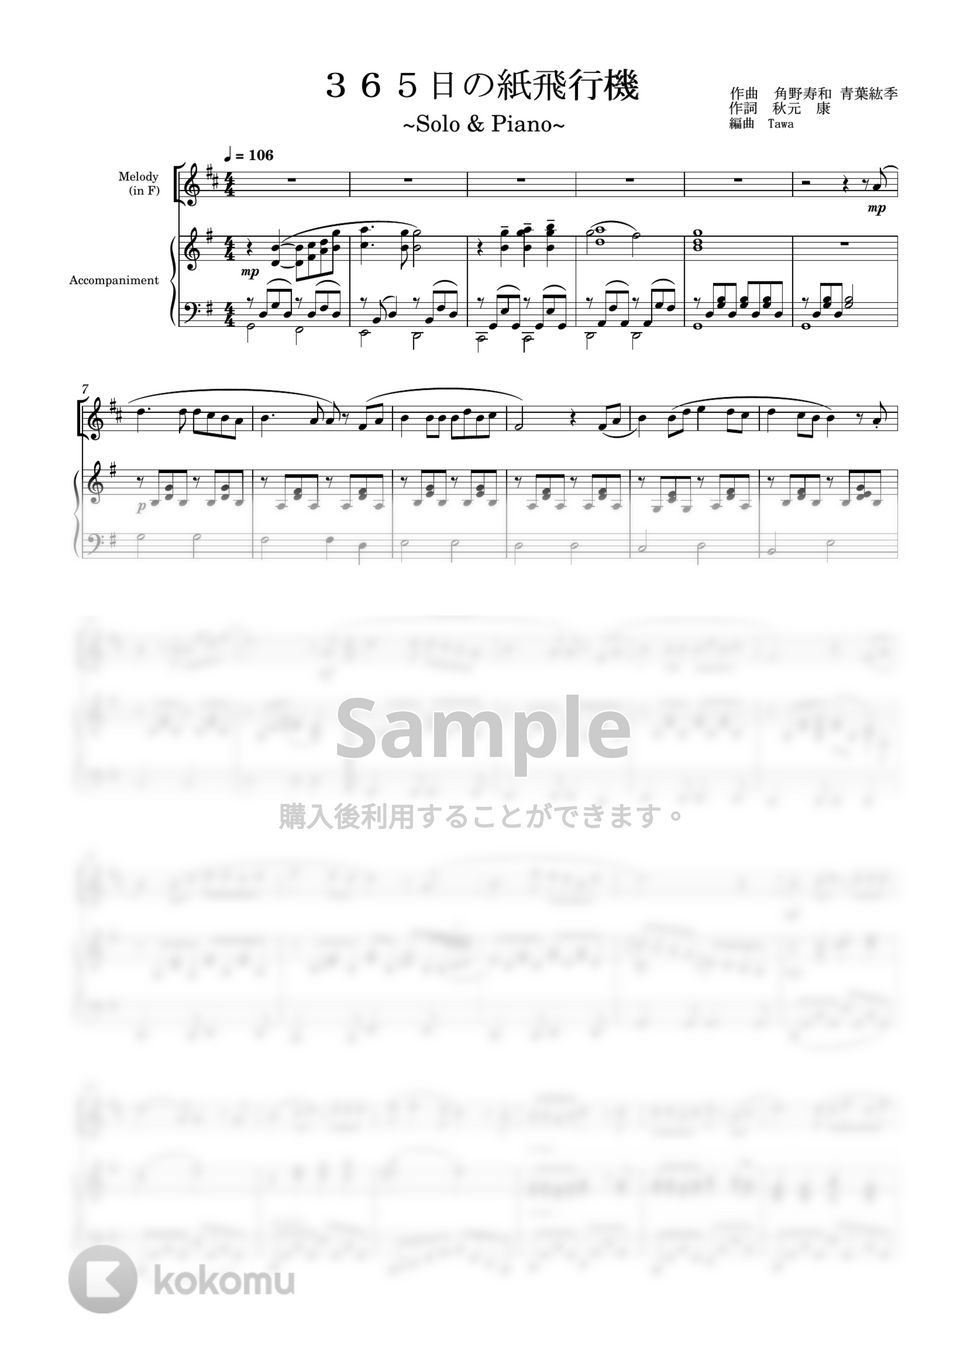 AKB48 - 365日の紙飛行機 (ソロ(in F) / ピアノ伴奏) by Tawa